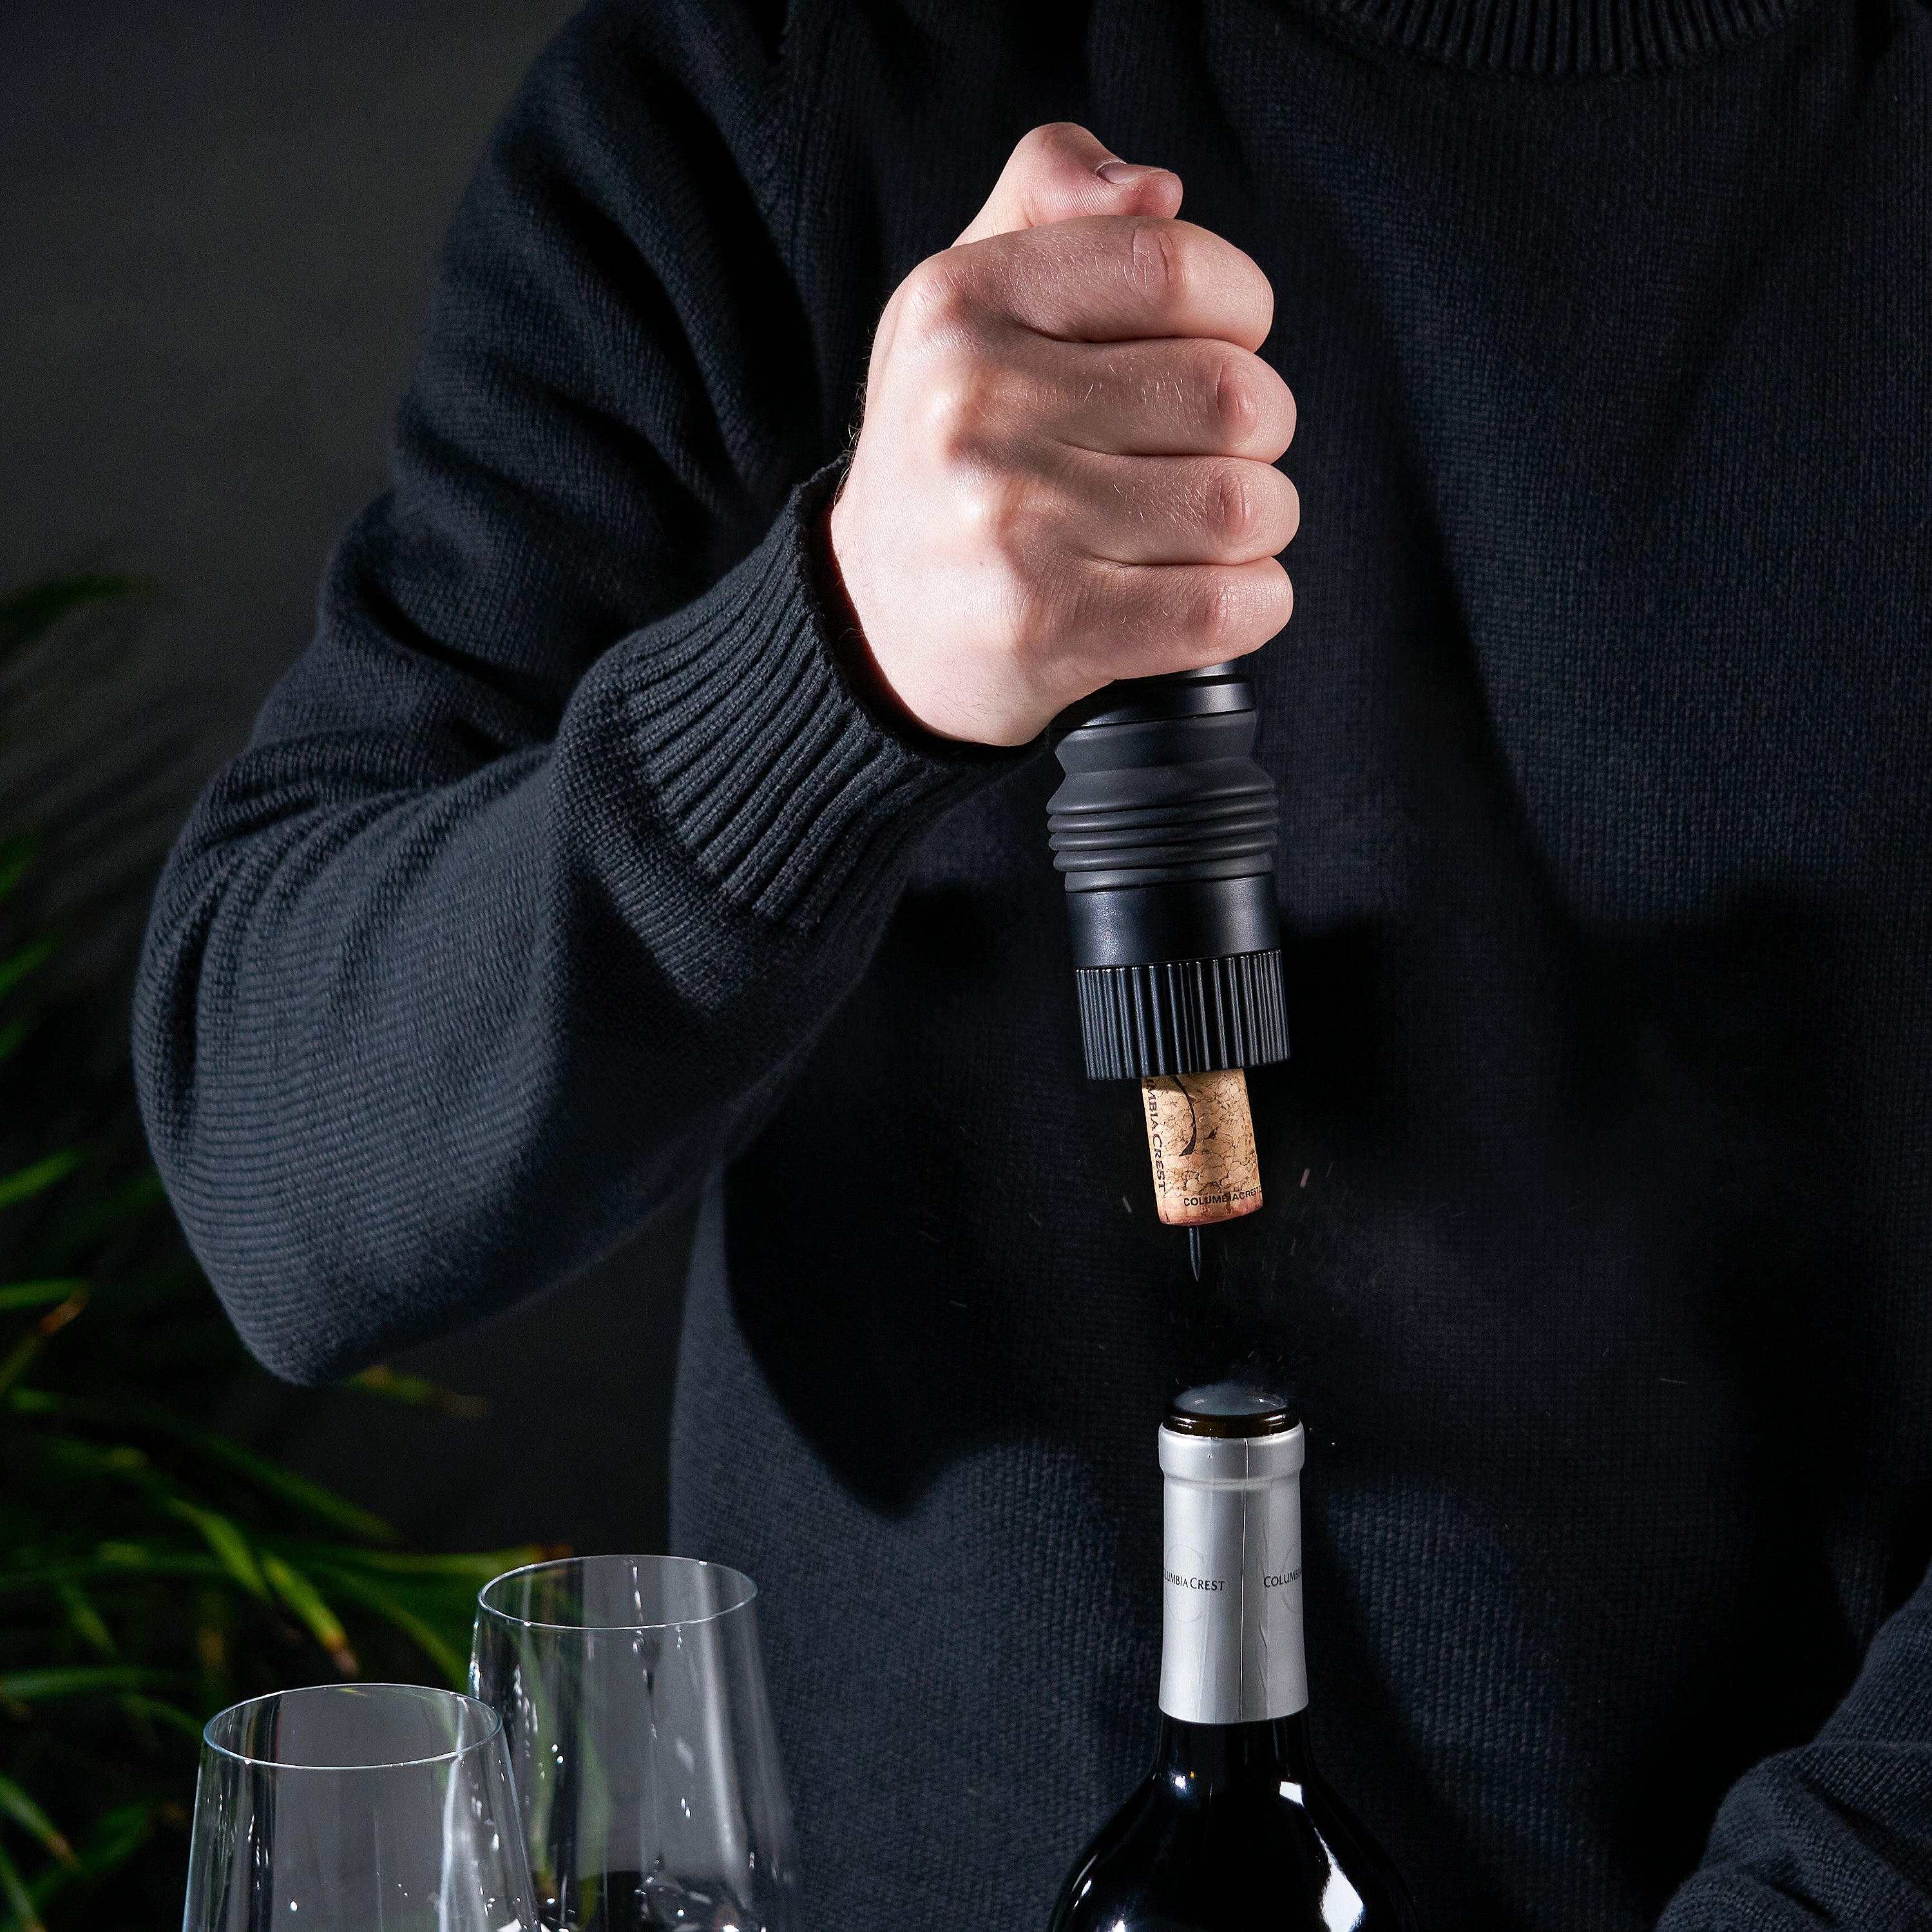 Alchemi by Viski Wine Cork Remover CO2 Wine Opener with Compressed Gas  Cartridge - Opens 80 Wine Bottles - Set of 1